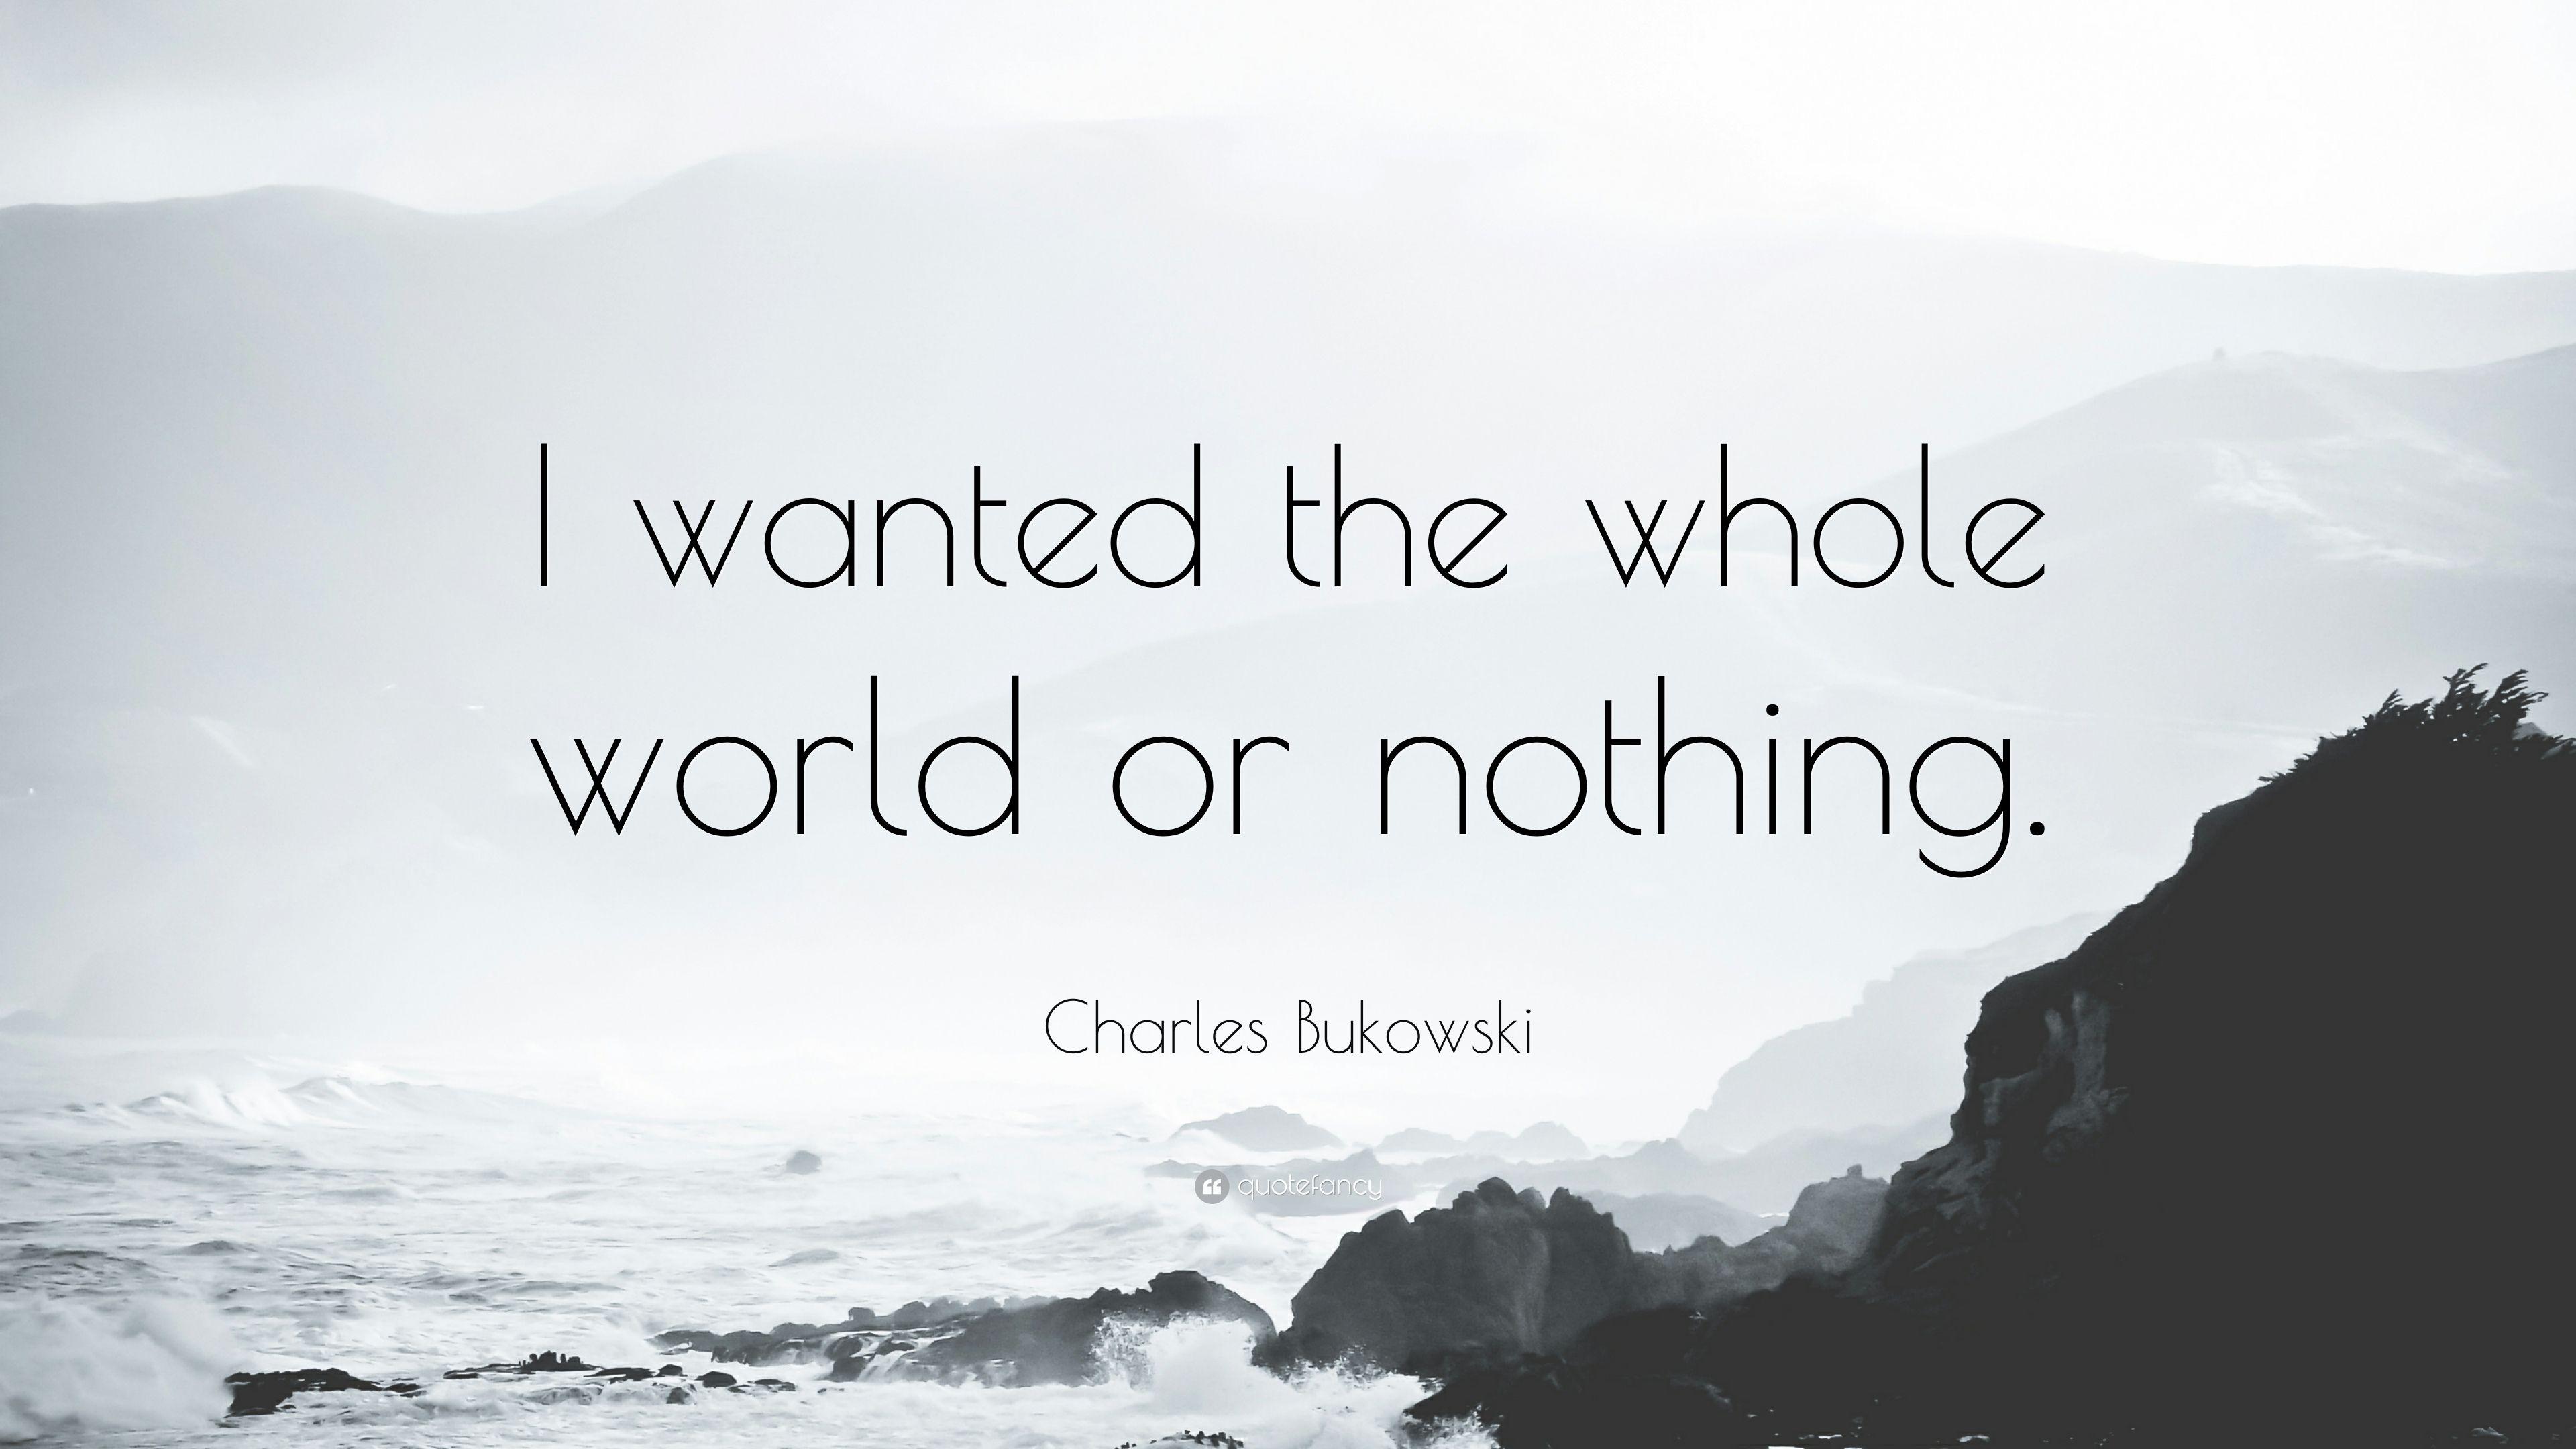 Charles Bukowski Quote: “I wanted the whole world or nothing.” 12